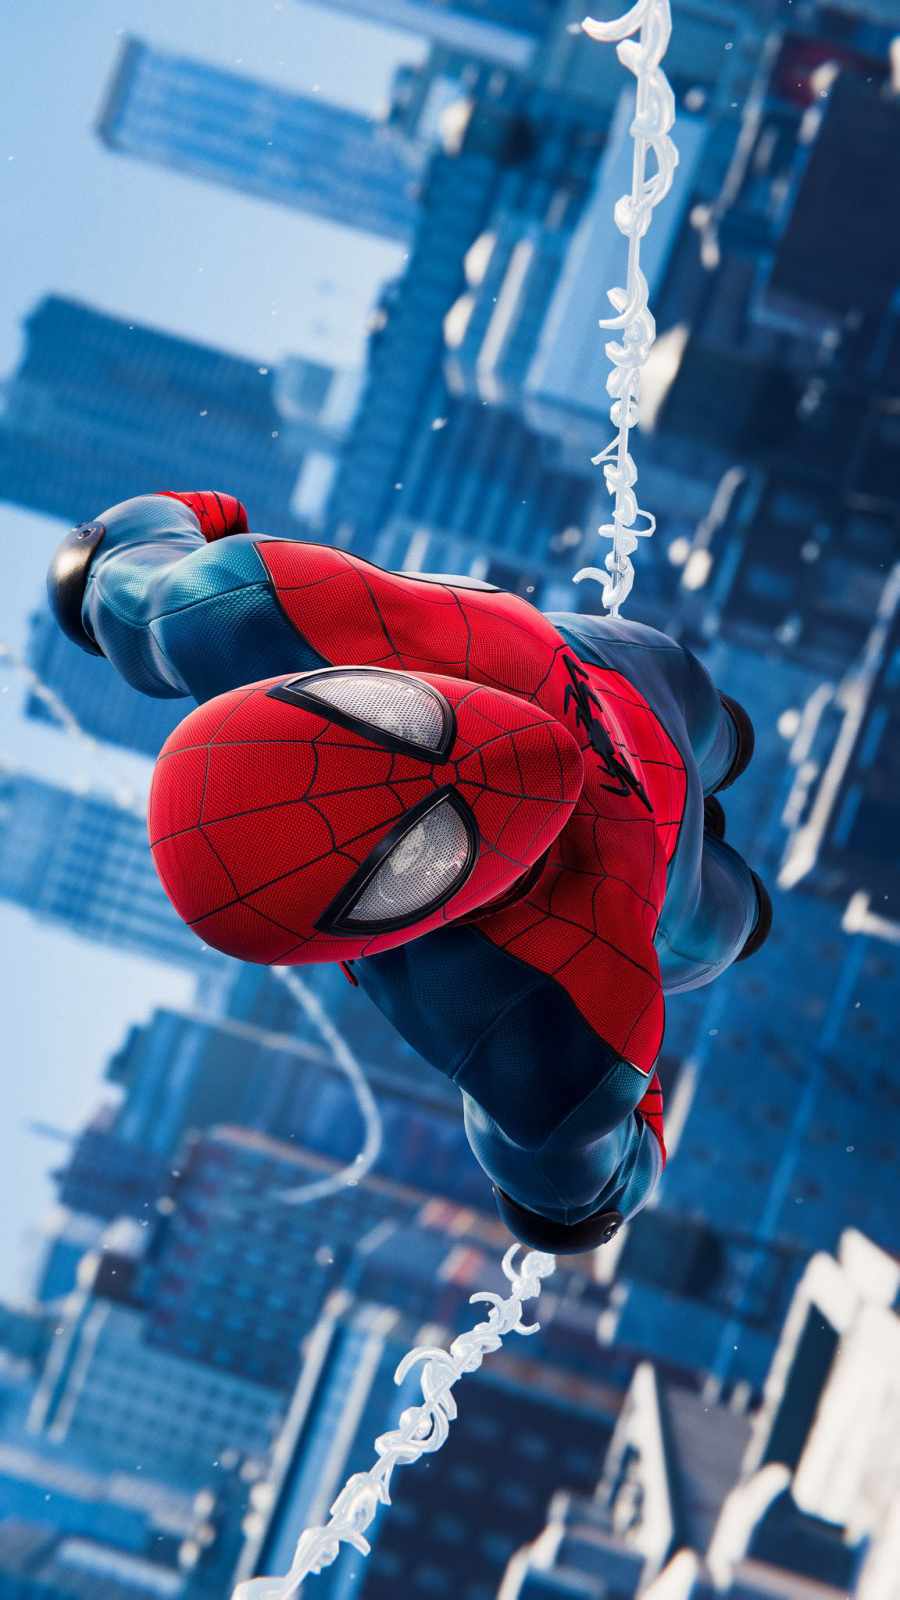 Spiderman Stunt IPhone Wallpaper  IPhone Wallpapers